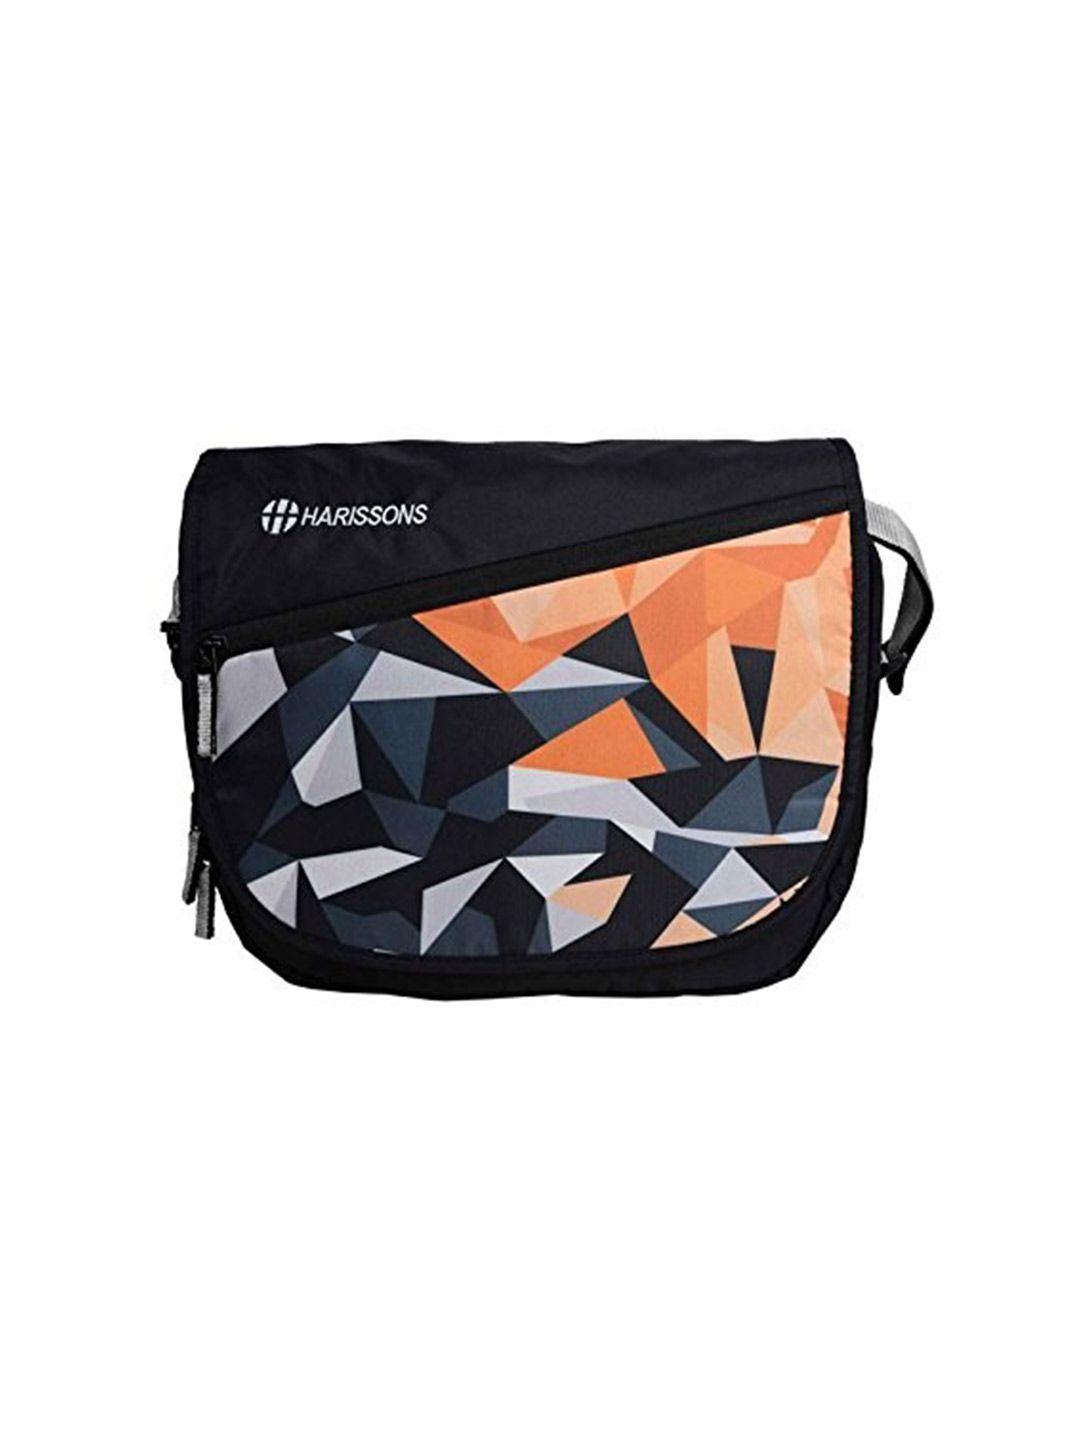 harissons unisex orange & black printed messenger bag